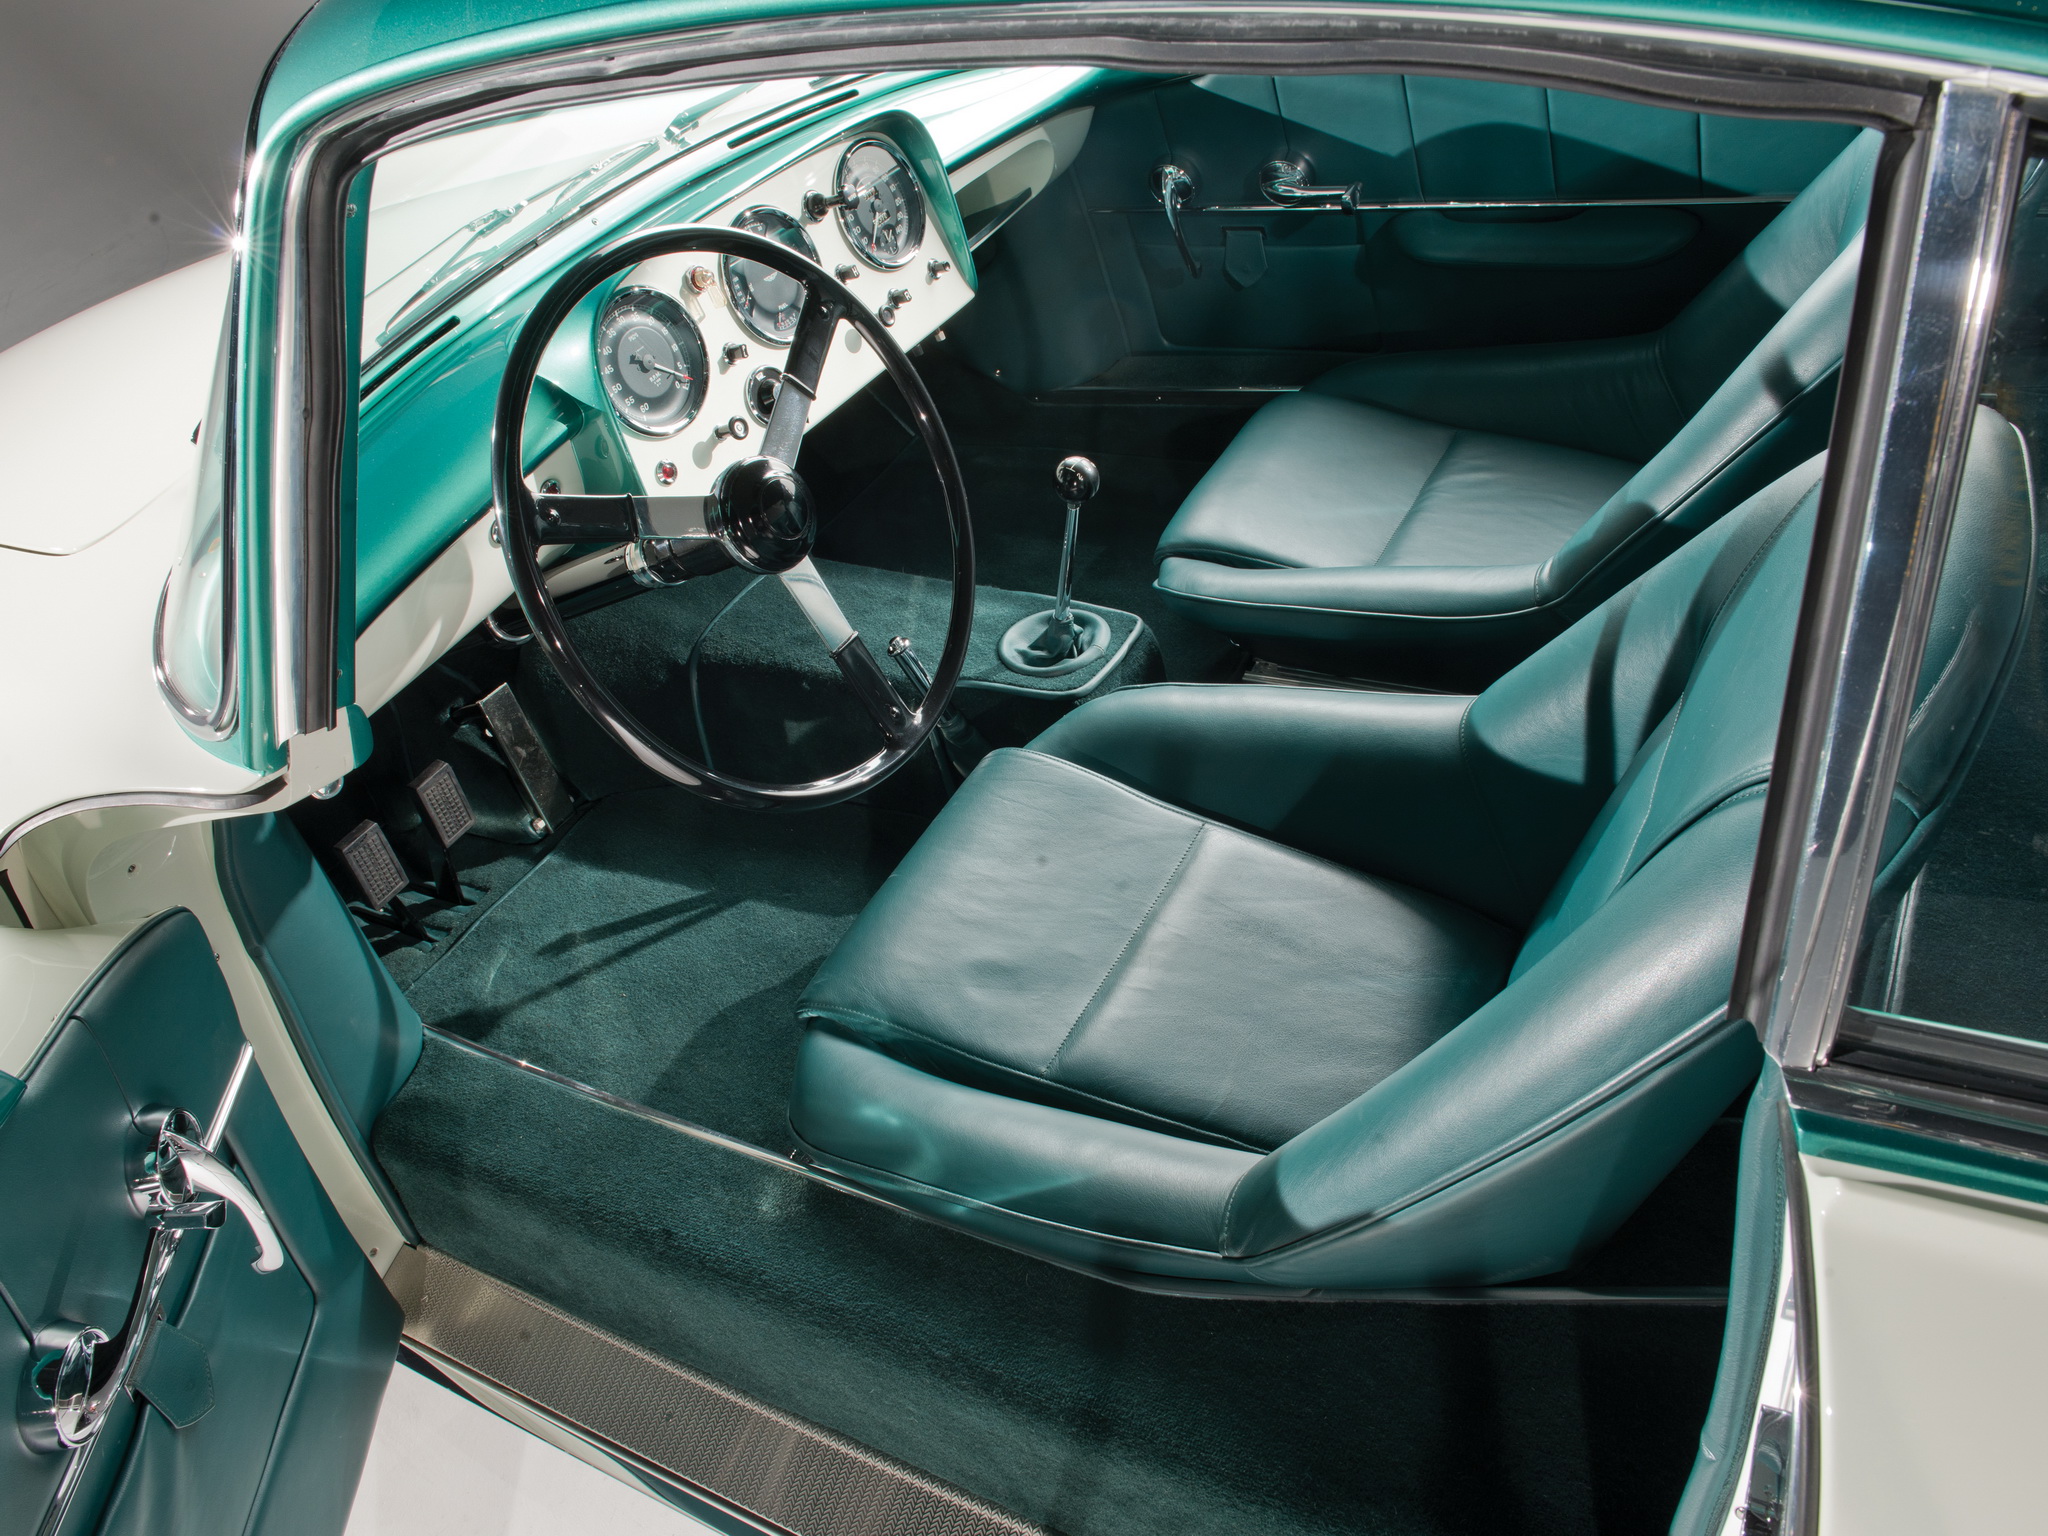 Aston Martin DB2/4 Mk II Supersonic (Ghia), 1956 - Interior - Photo: Darin Schnabel